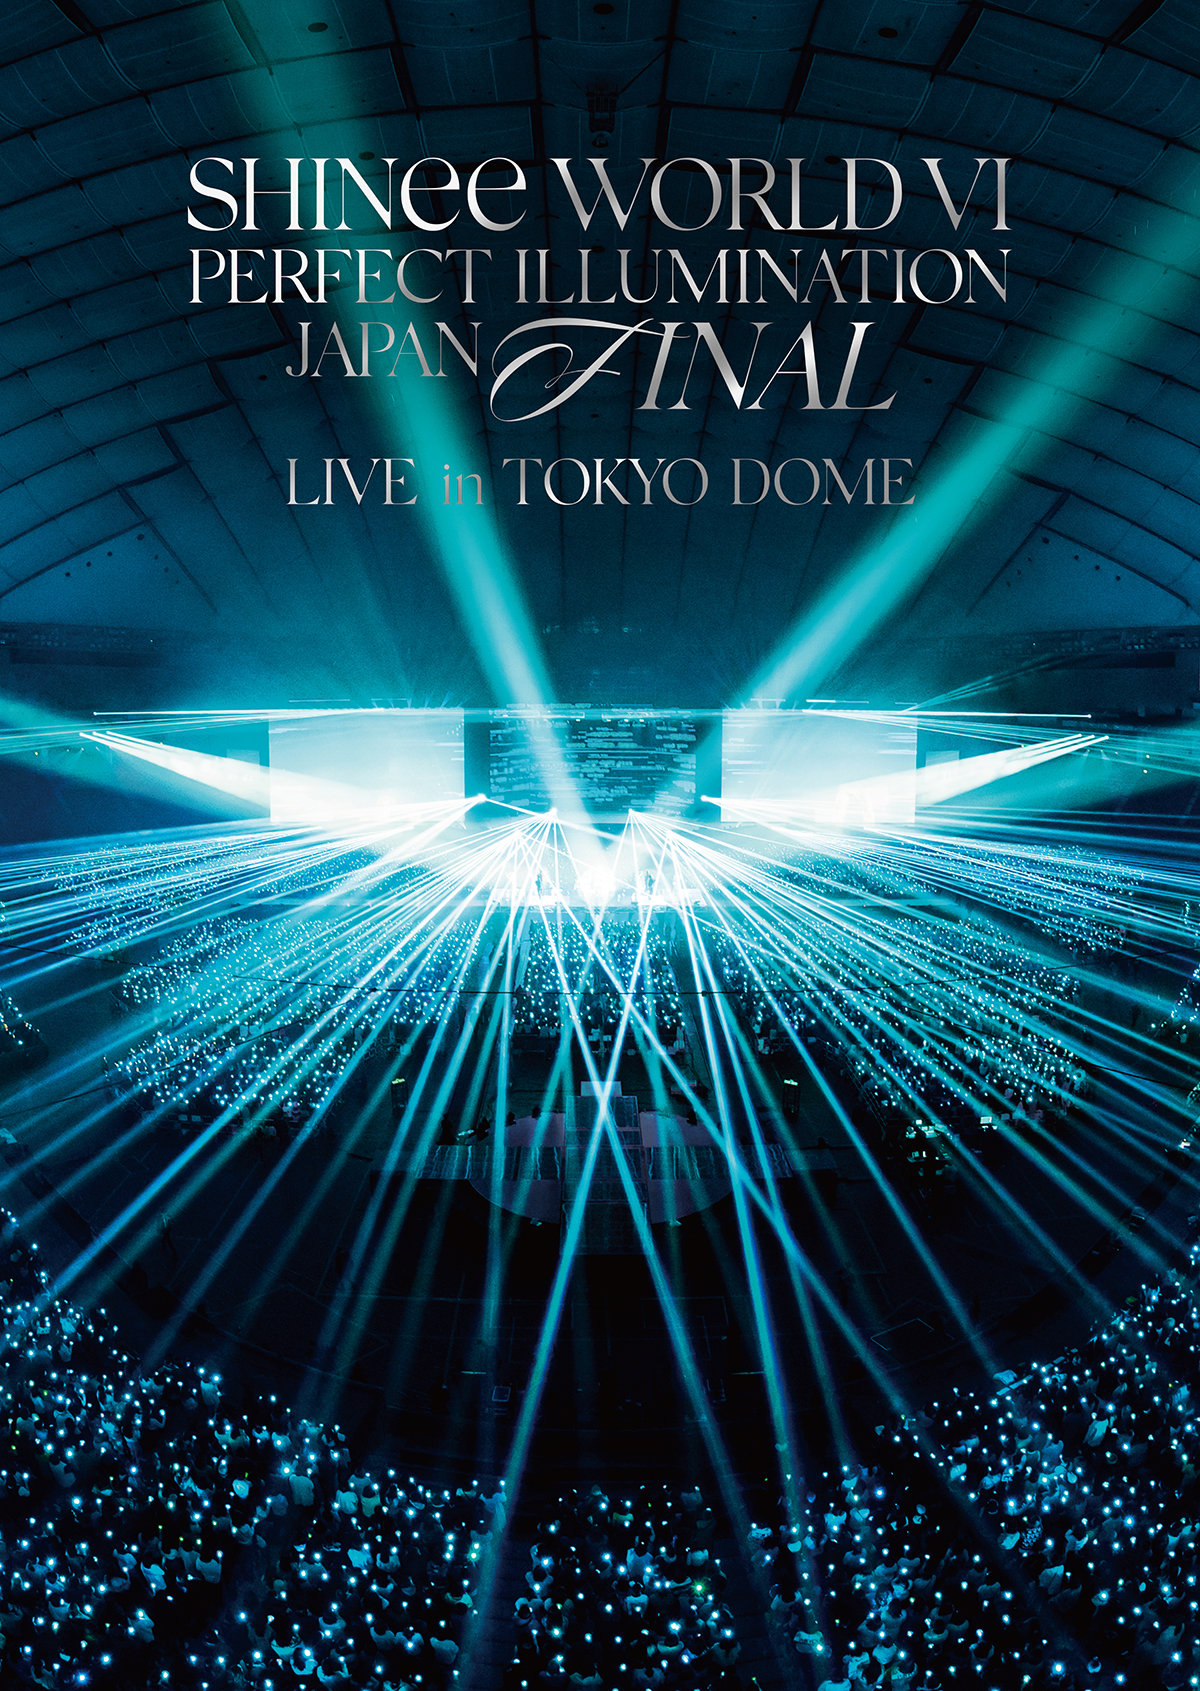 『SHINee WORLD VI [PERFECT ILLUMINATION] JAPAN FINAL LIVE in TOKYO DOME』 【UNIVERSAL MUSIC STORE限定盤 Blu-ray】